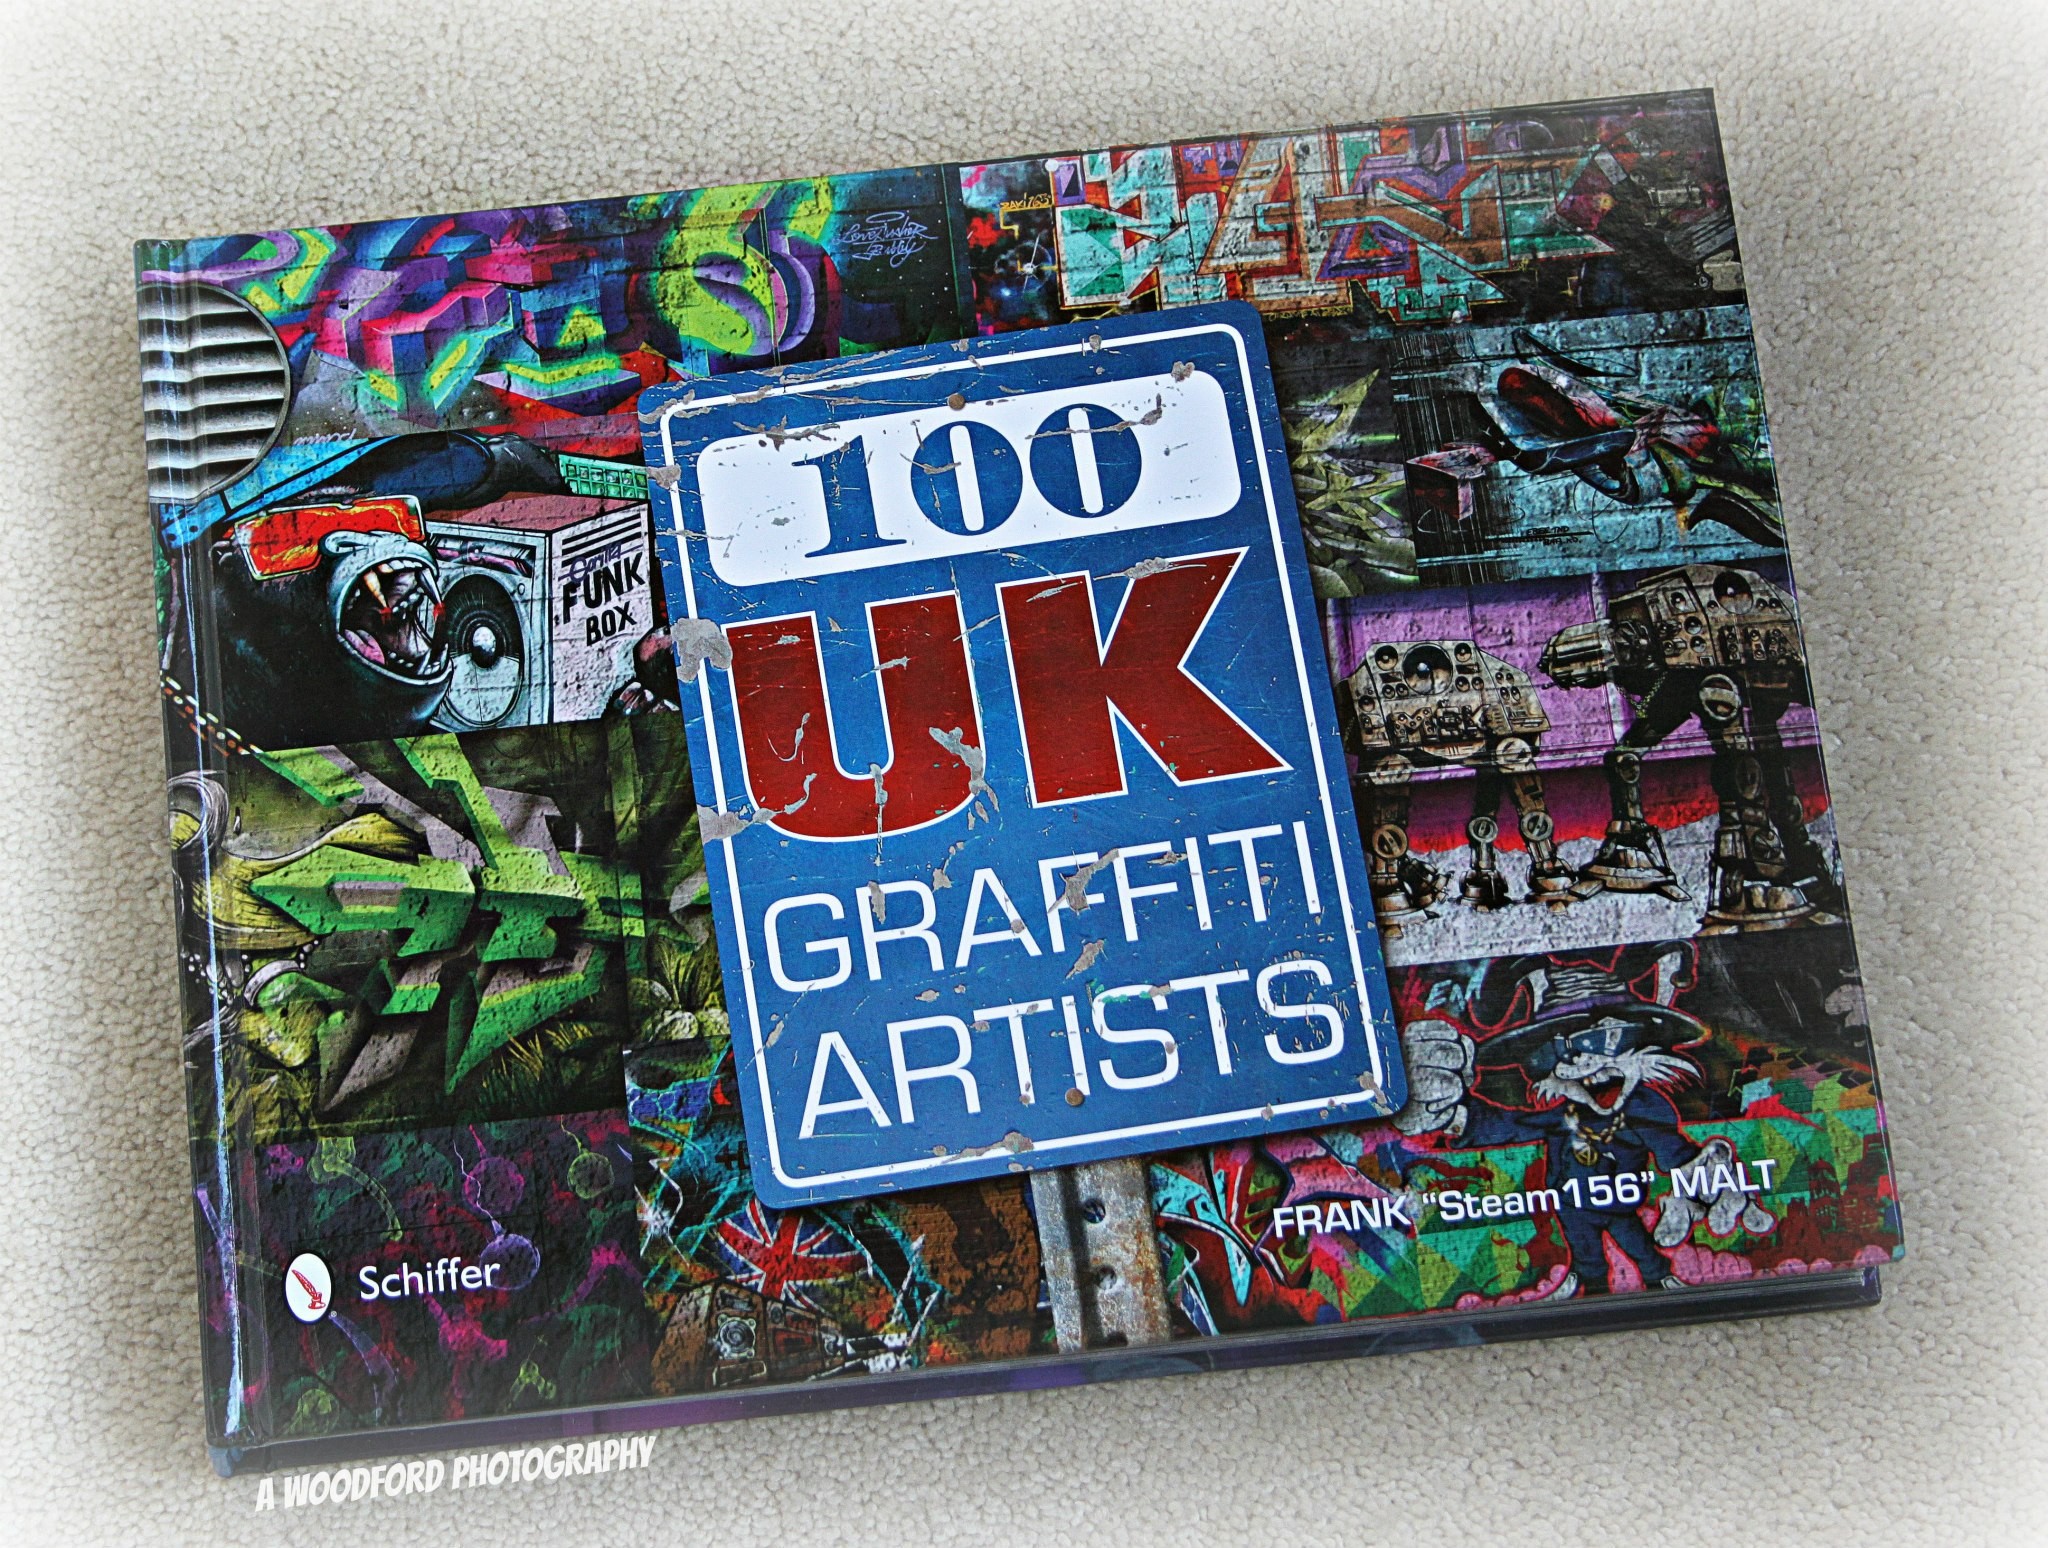 100 UK GRAFFITI ARTISTS BOOK